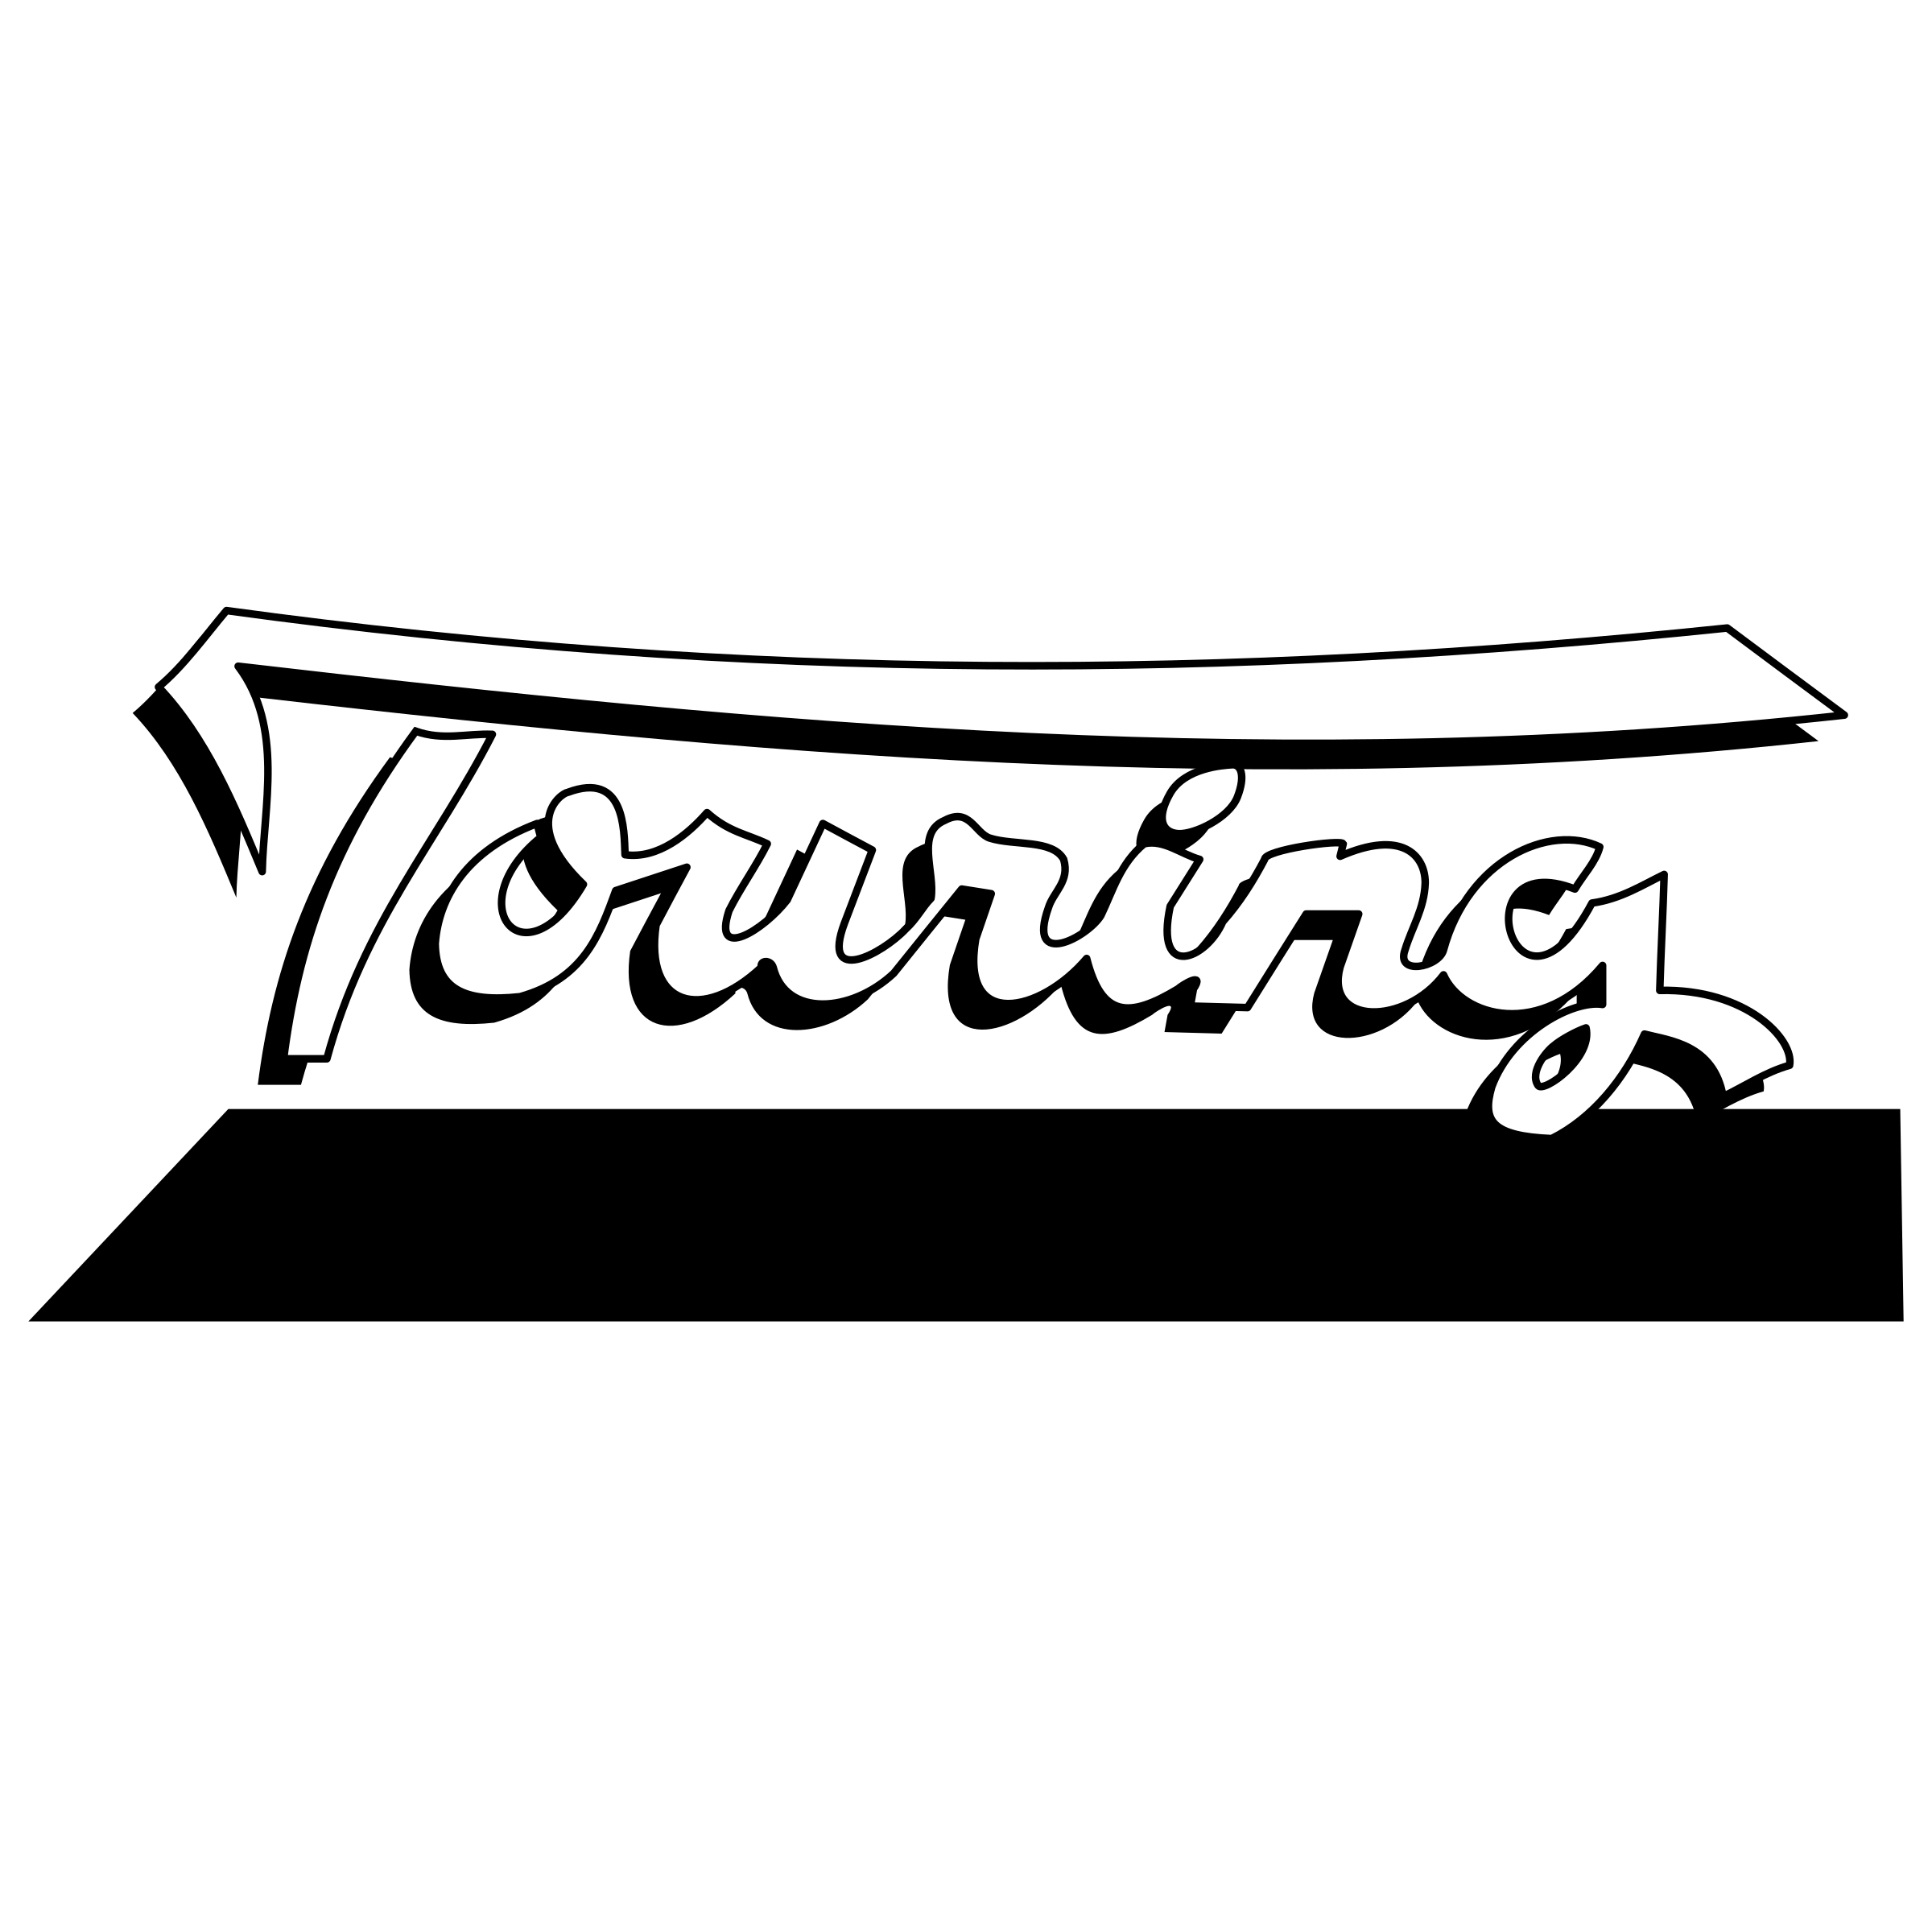 Touring Logo - Touring Logo PNG Transparent & SVG Vector - Freebie Supply